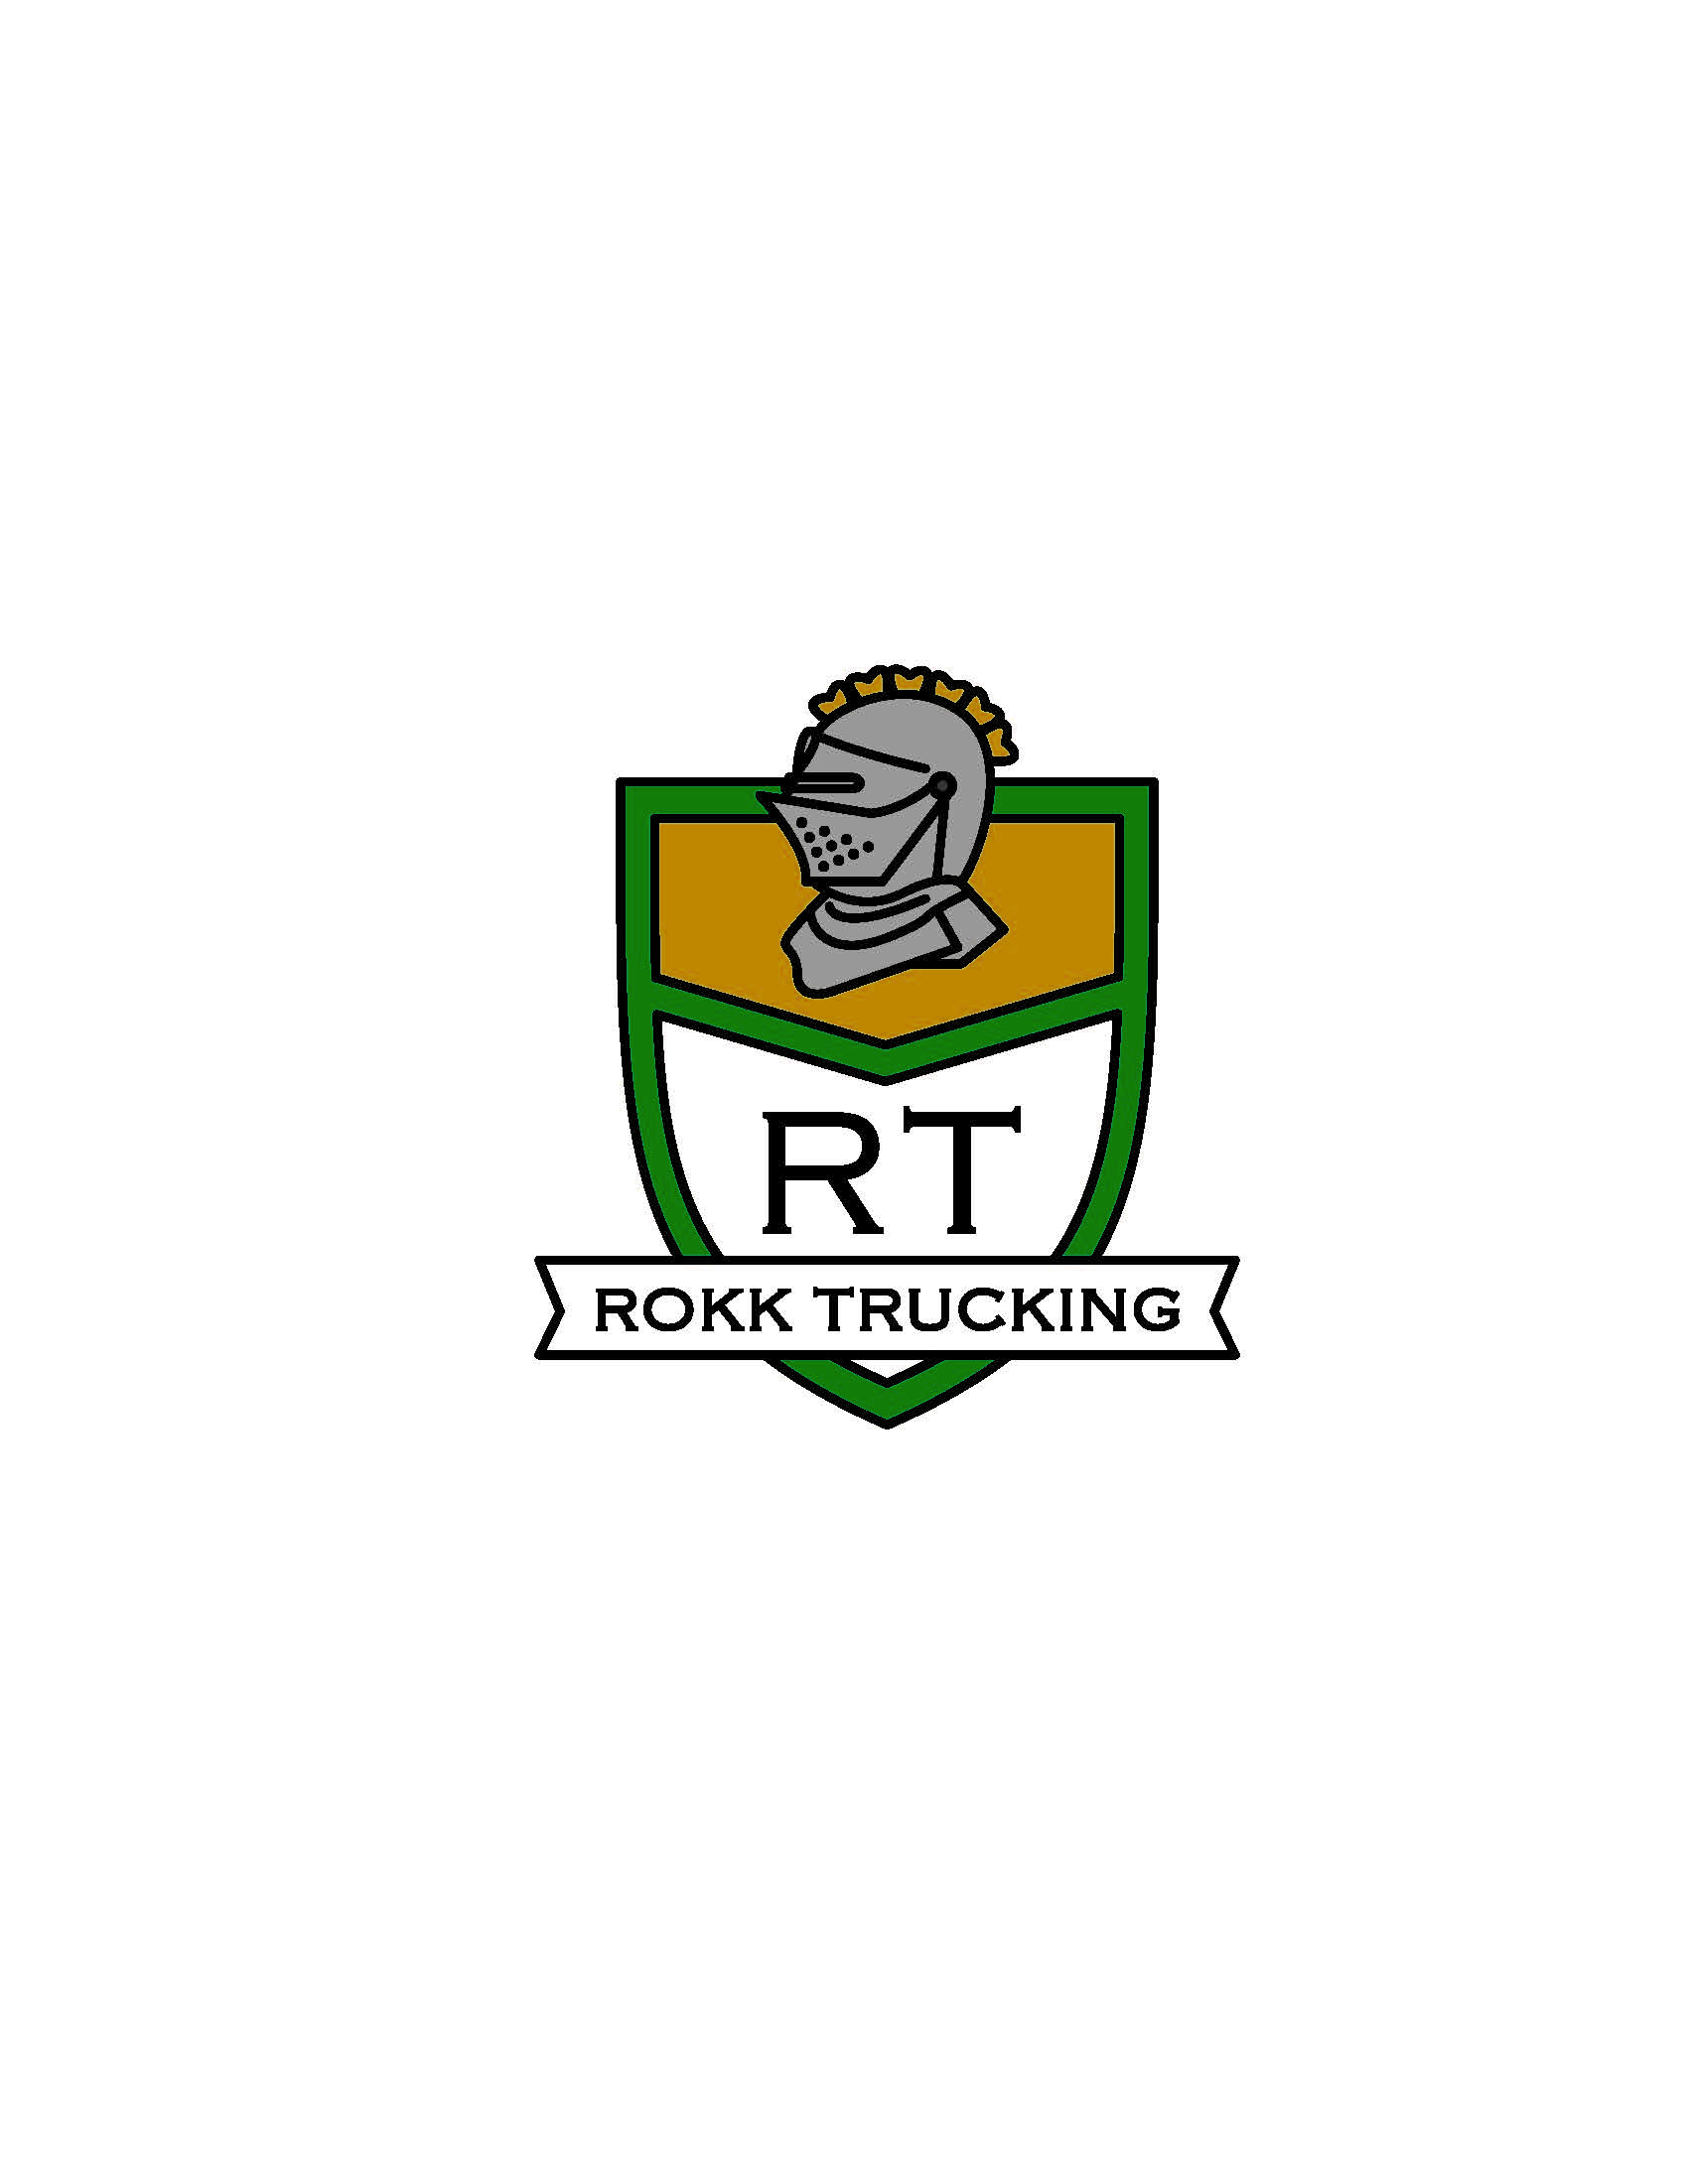 rokk_trucking_logo.10.21.16_Page_2.jpg